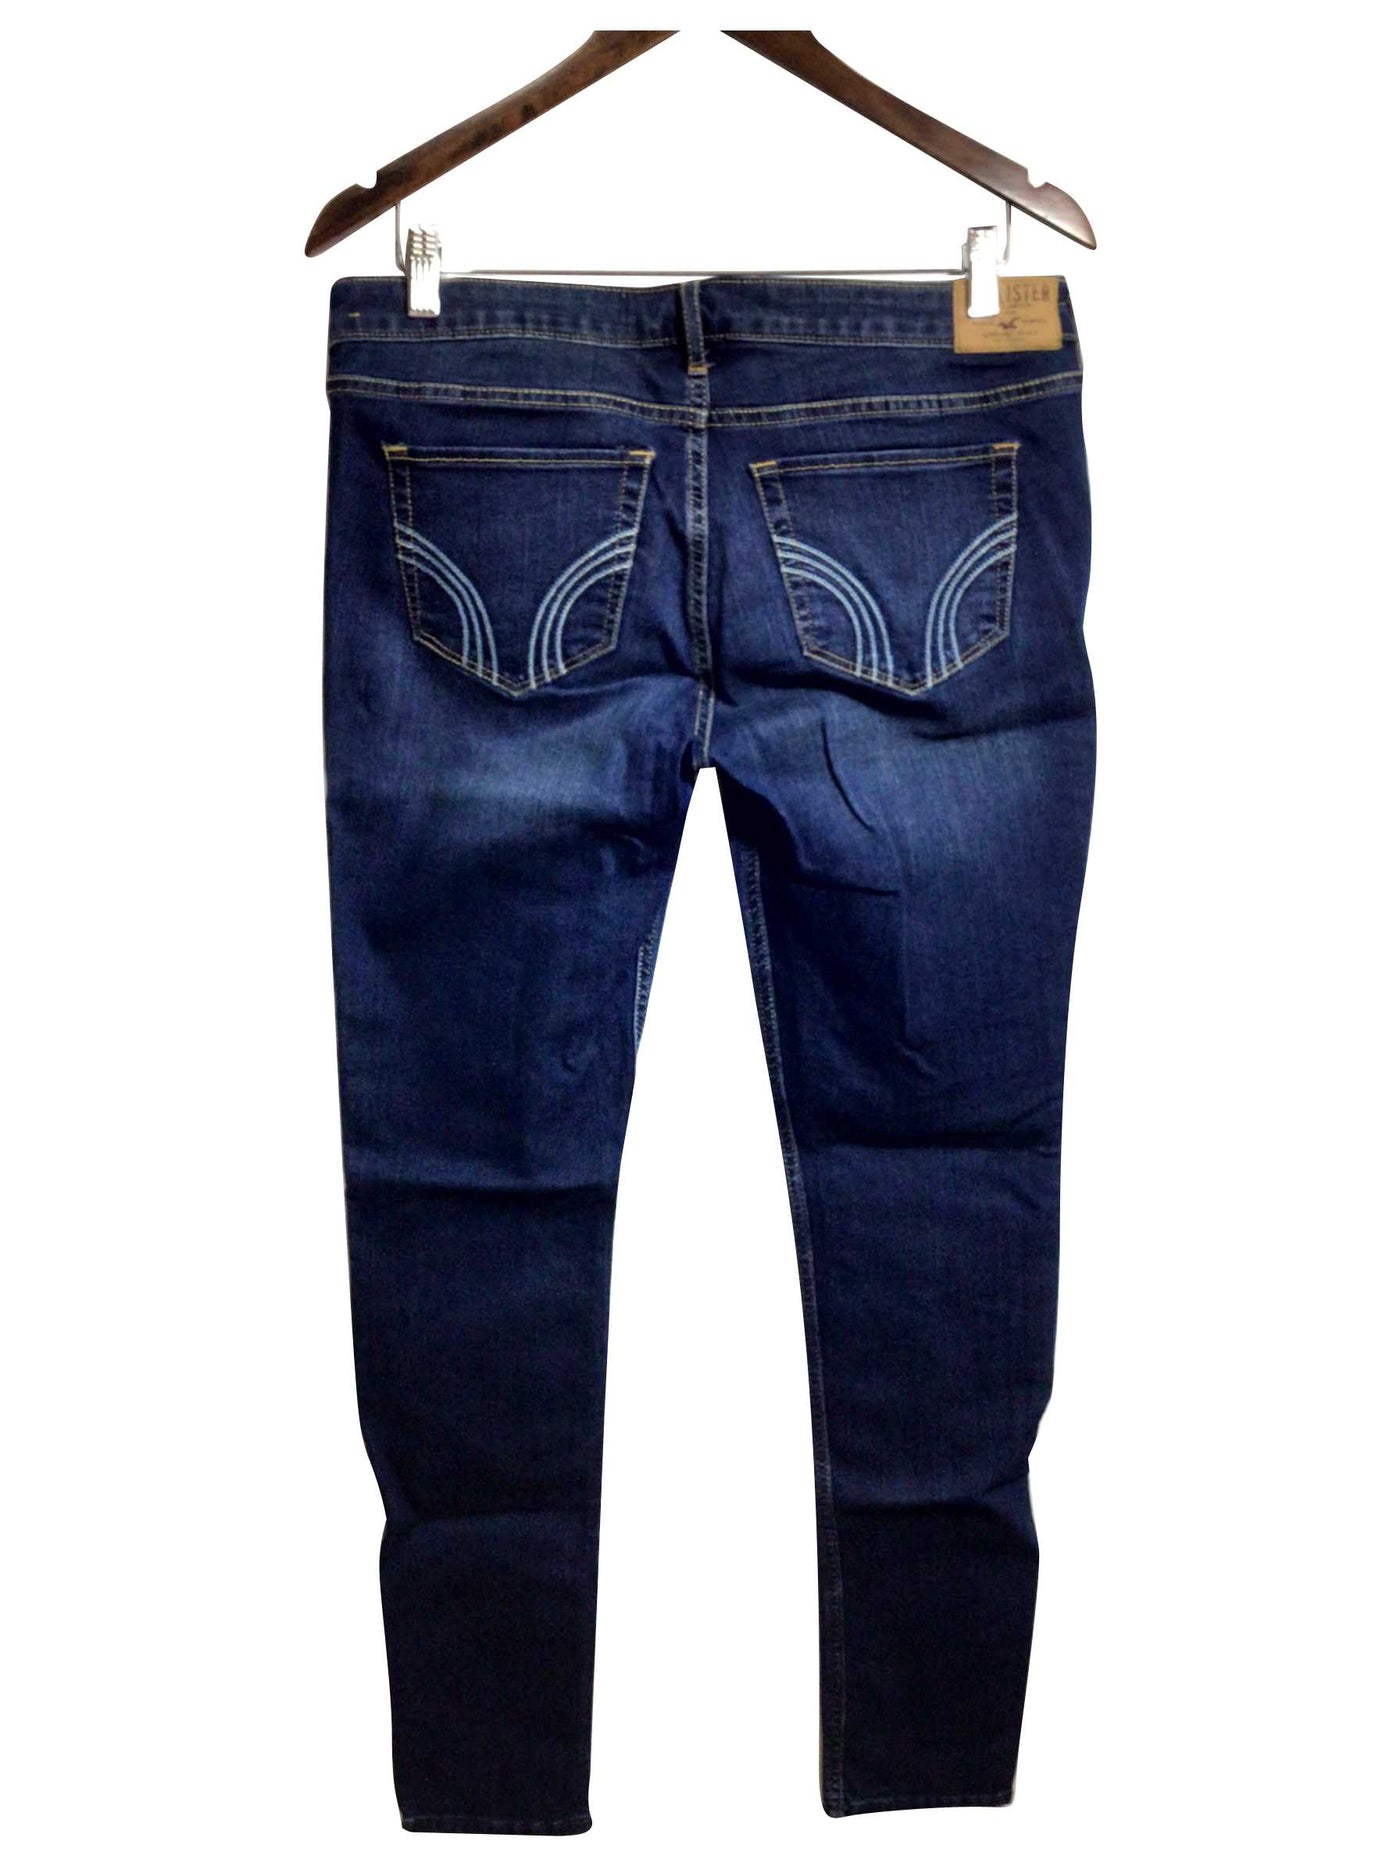 HOLLISTER Regular fit Straight-legged Jeans in Blue - Size 30x31 | 15.95 $ KOOP